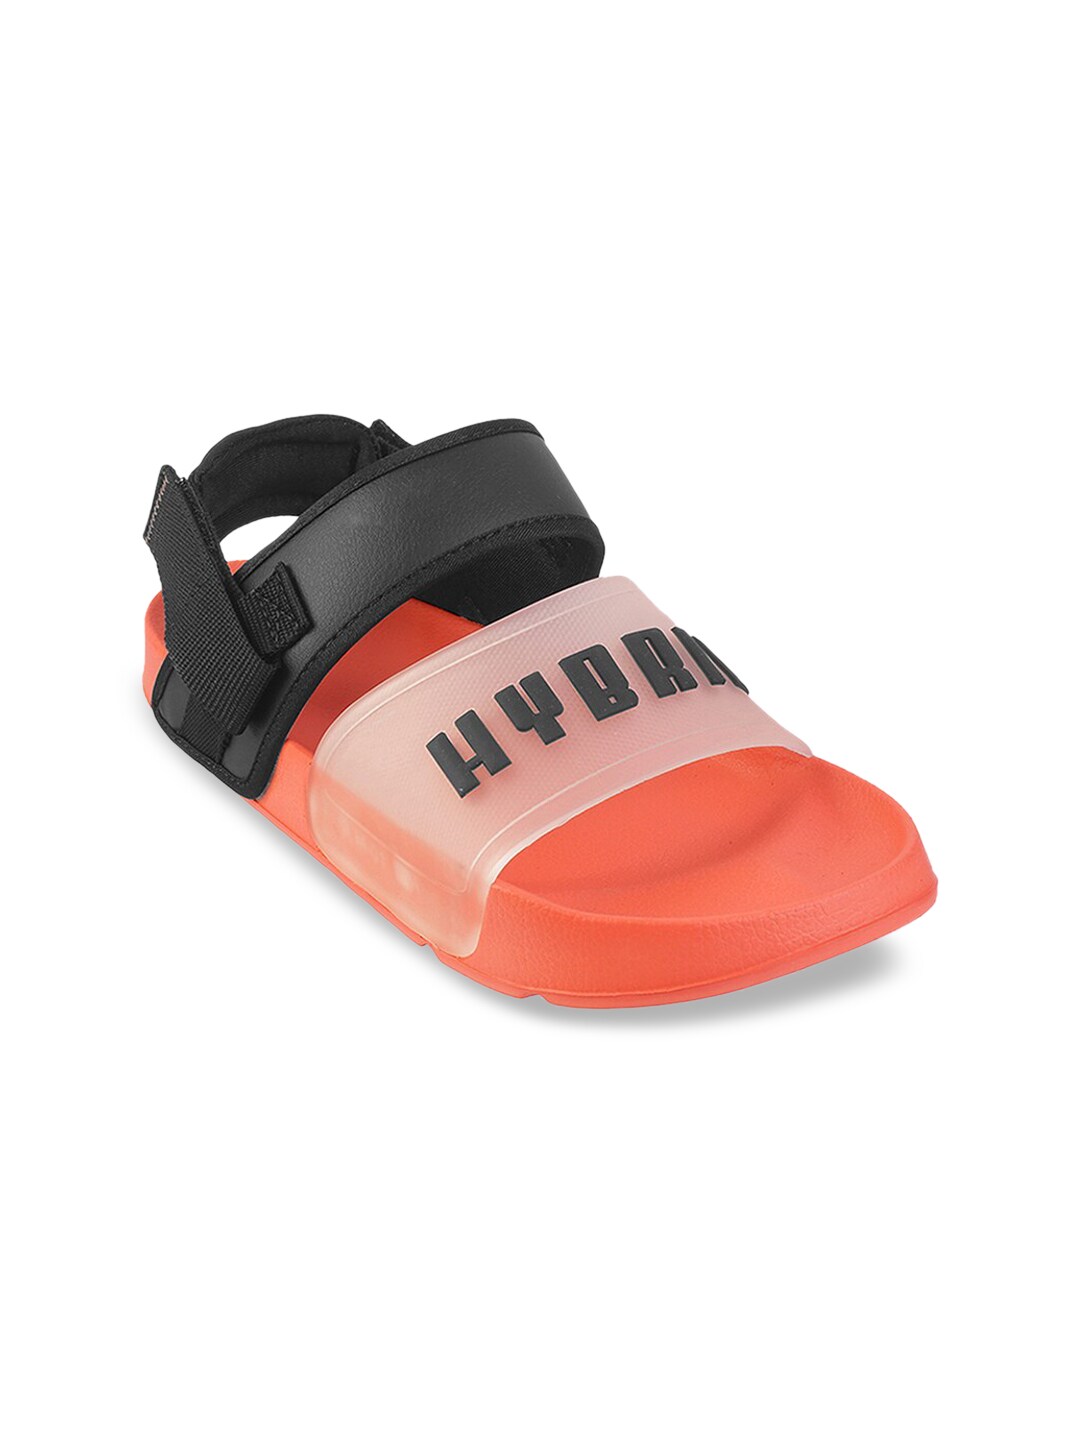 Vento Unisex Orange & Black Colourblocked Sports Sandal Price in India